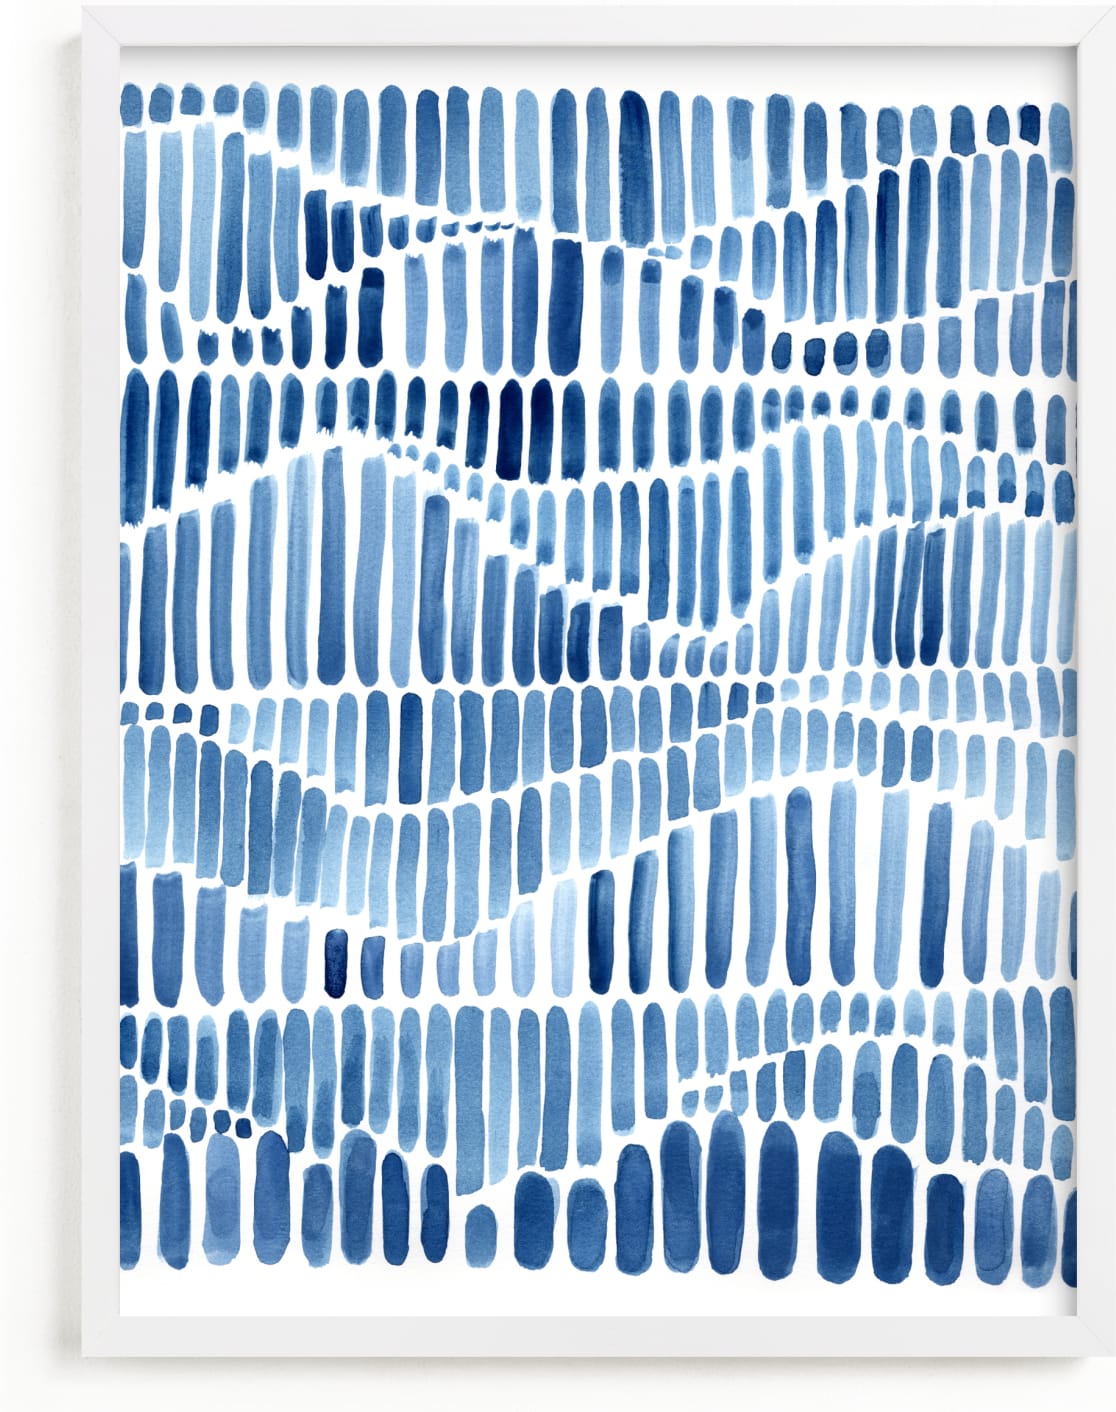 This is a blue art by Kristi Caterson called Indigo Rhythm.